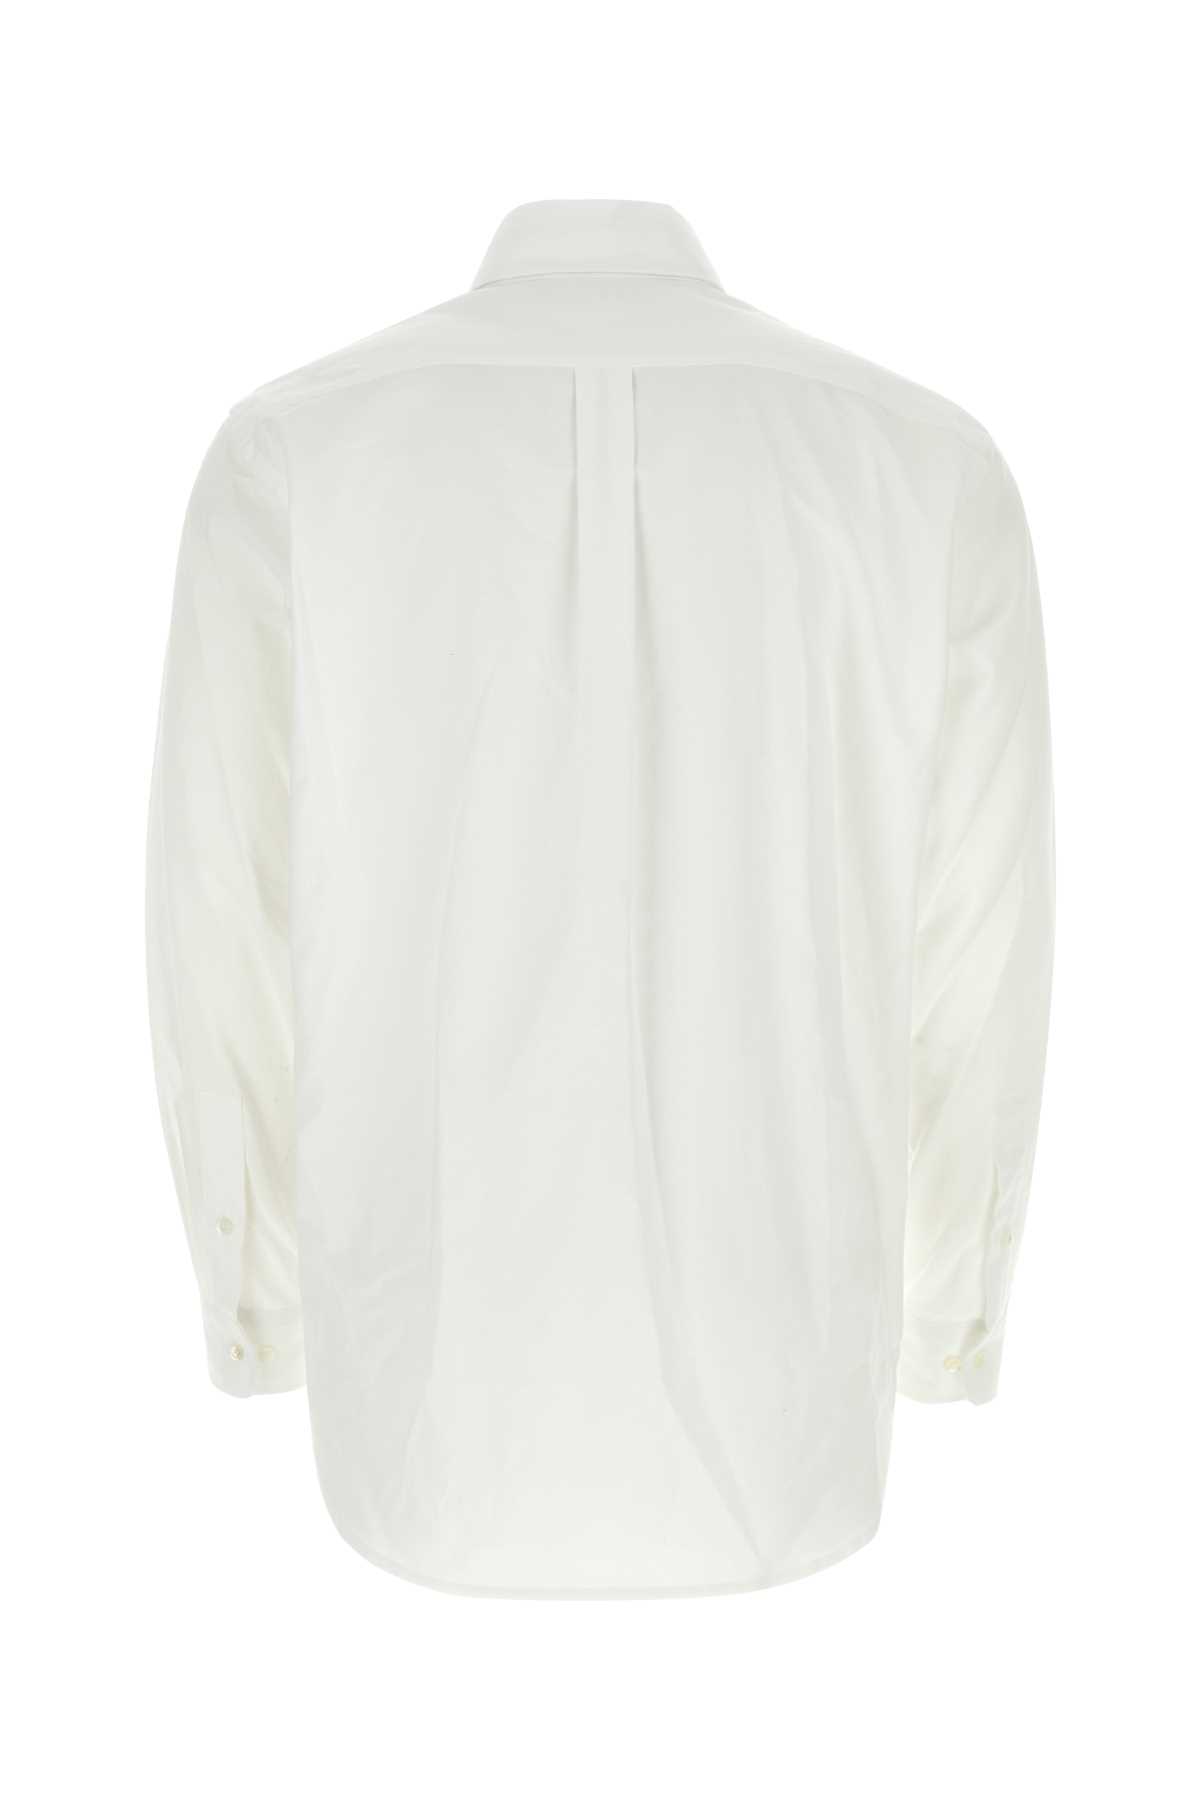 Palm Angels White Cotton Shirt In Whiteblac